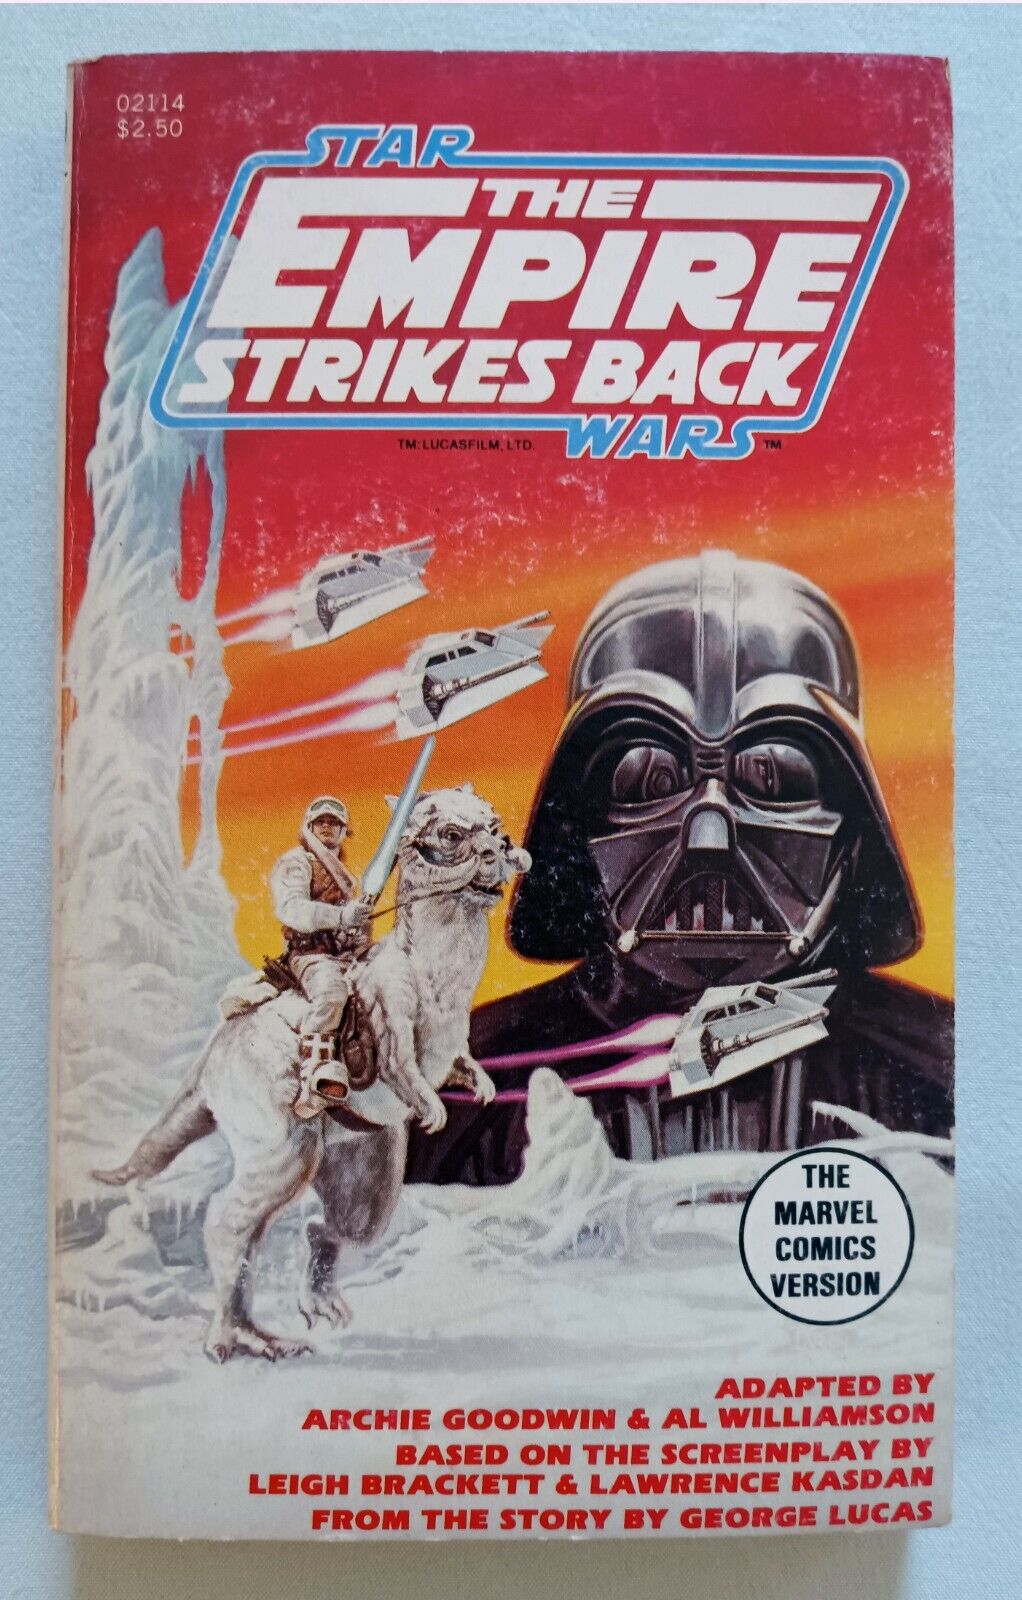 MARVEL ILLUSTRATED, STAR WARS. EMPIRE STRIKES BACK, PAPERBACK, PB, 1st, 1980